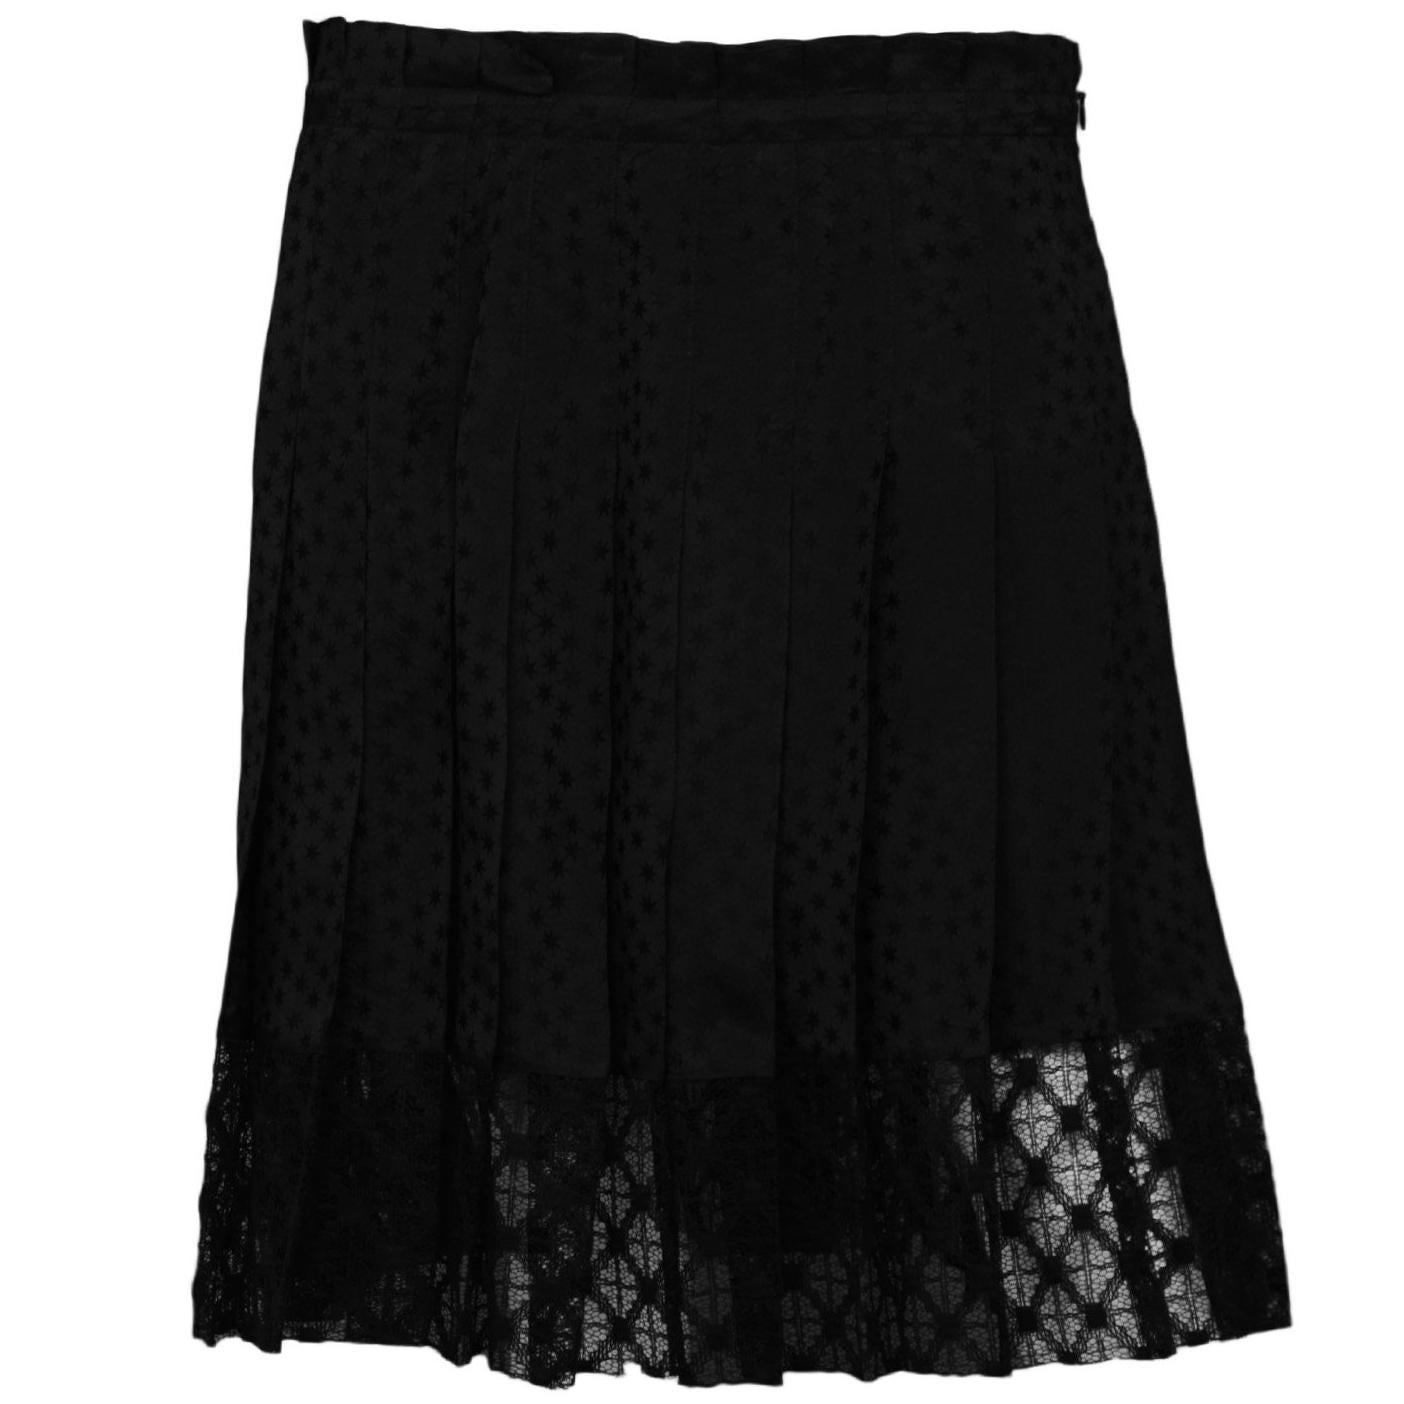 Philosophy Di Lorenzo Serafini NWT Black Pleated Star Print Skirt sz 6 rt. $760